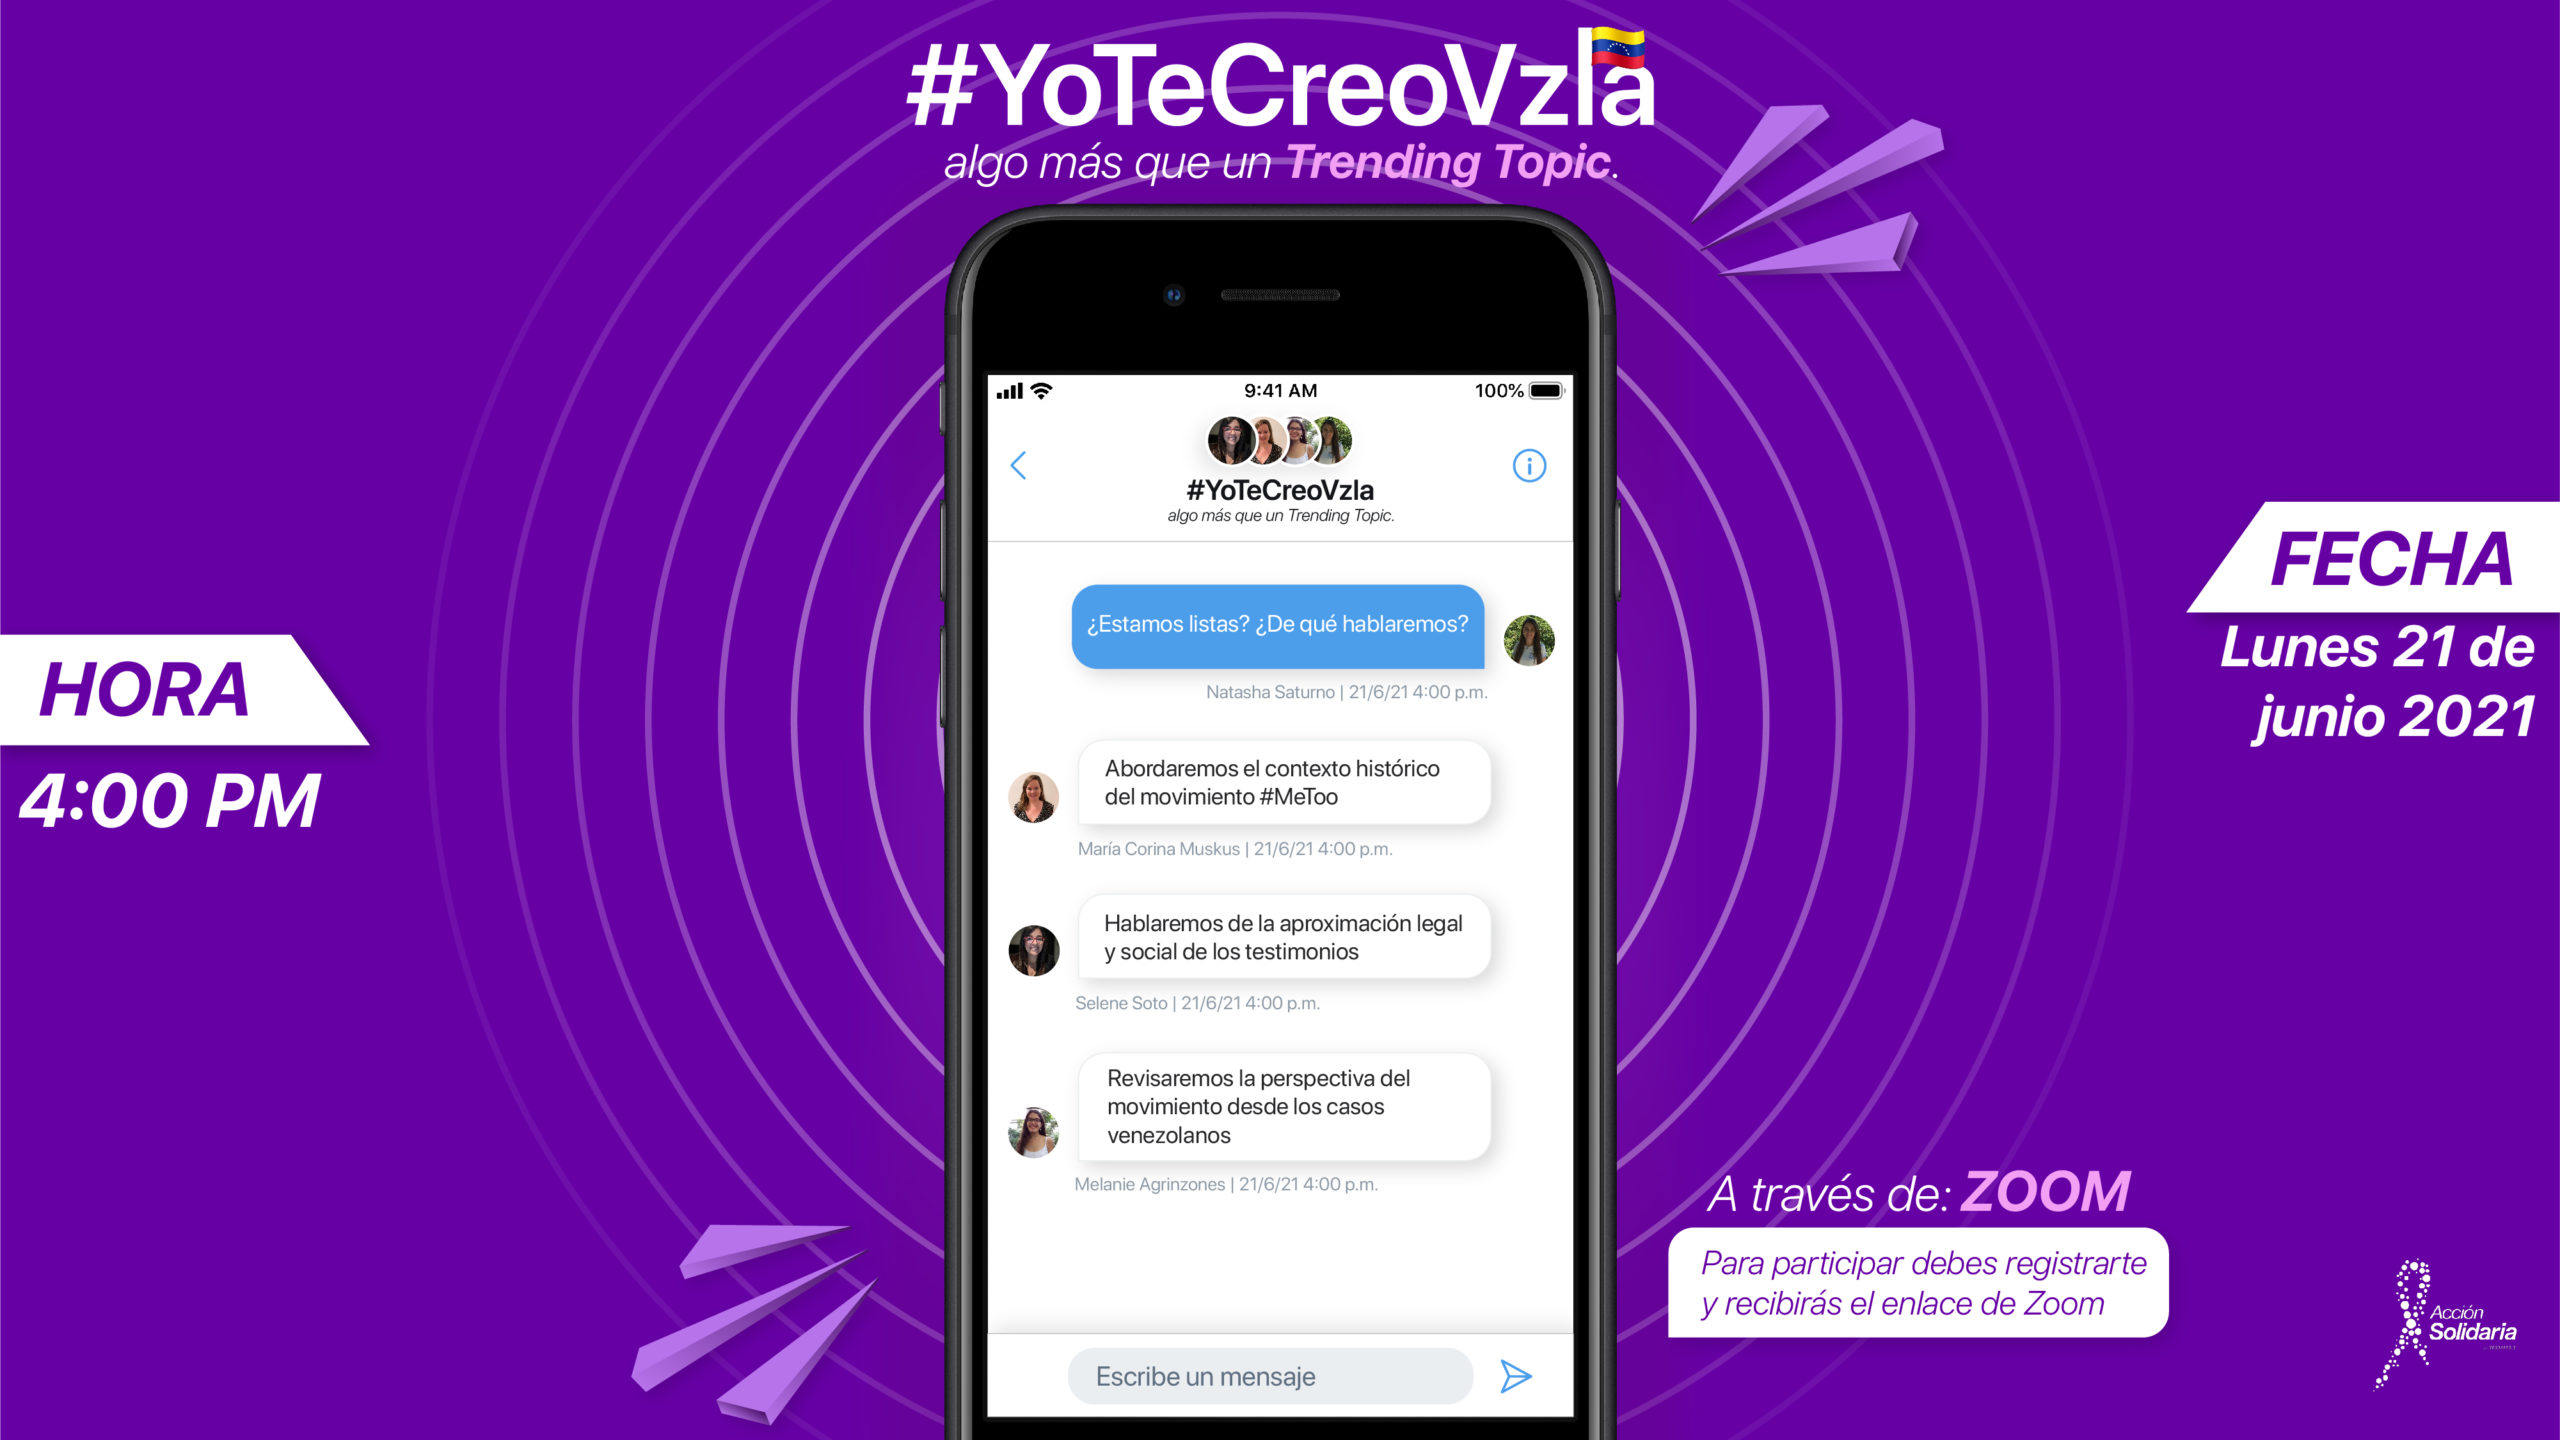 #YoTeCreoVzla algo más que un trending topic